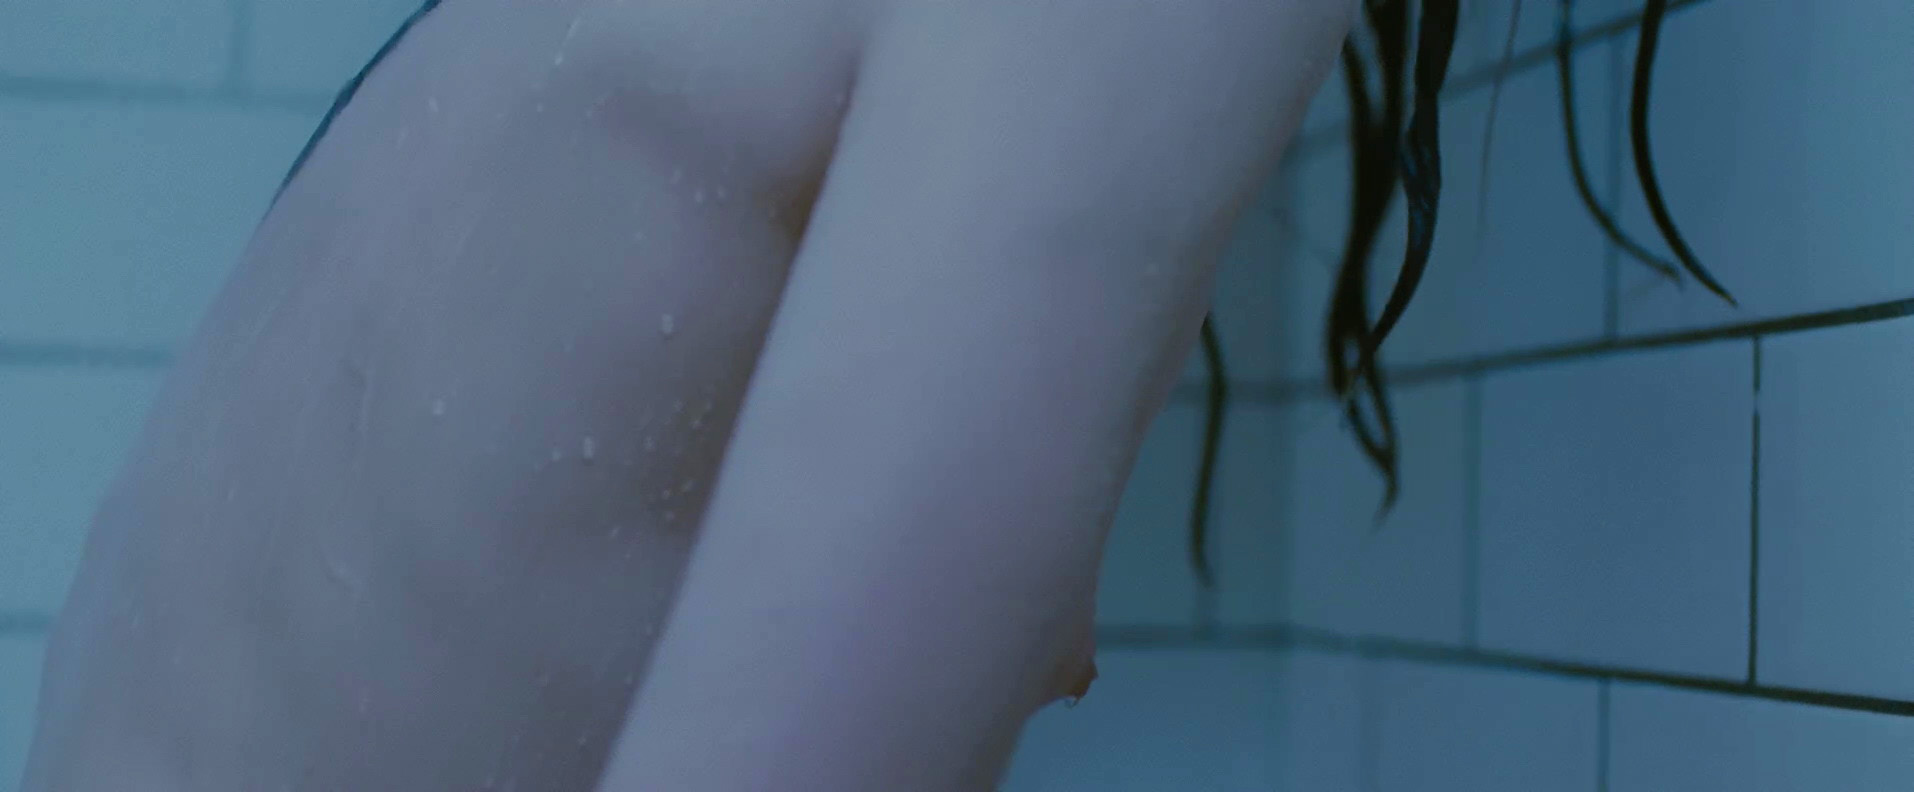 Mia Wasikowska - Stoker (2013) HD 1080p